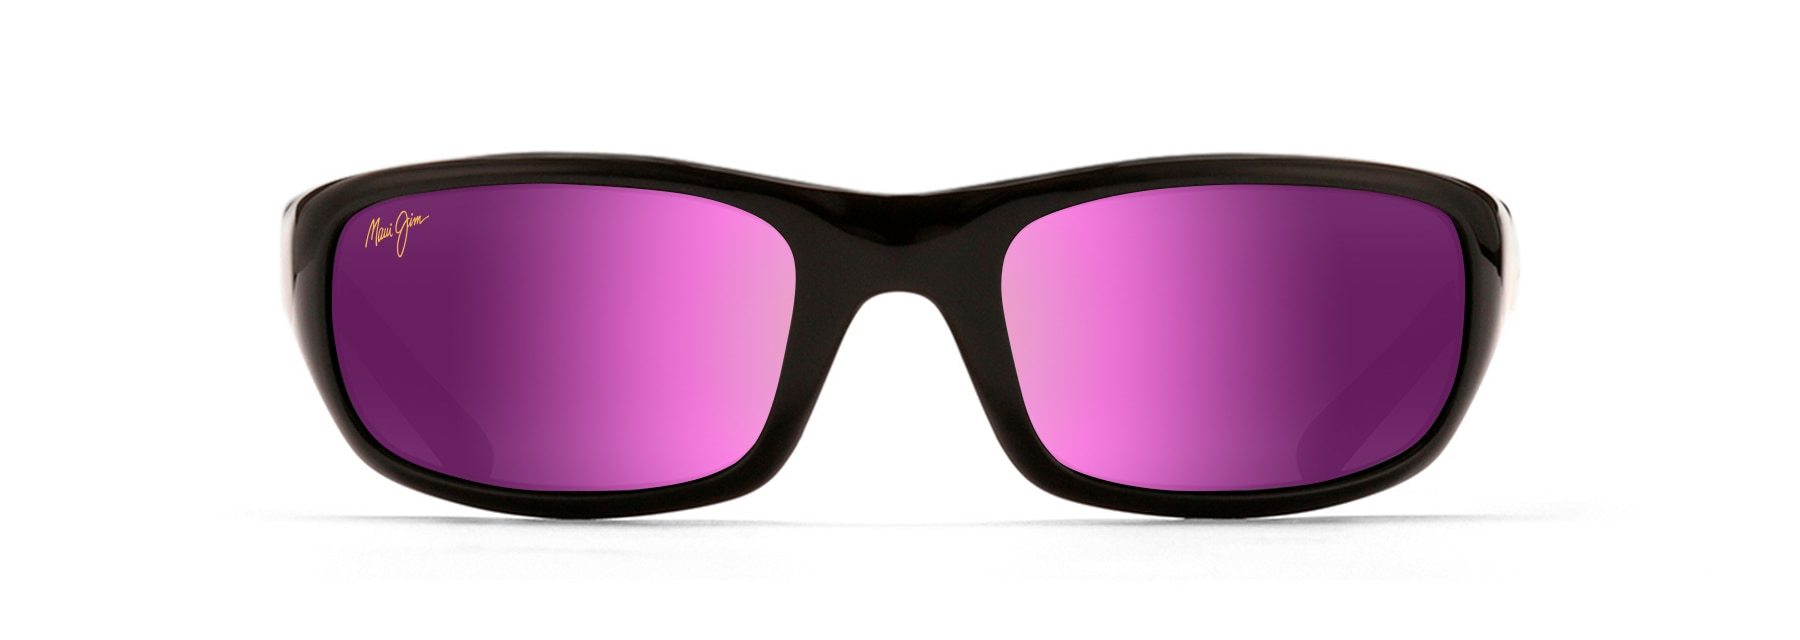 MyMaui Stingray MM103-025 Sunglasses